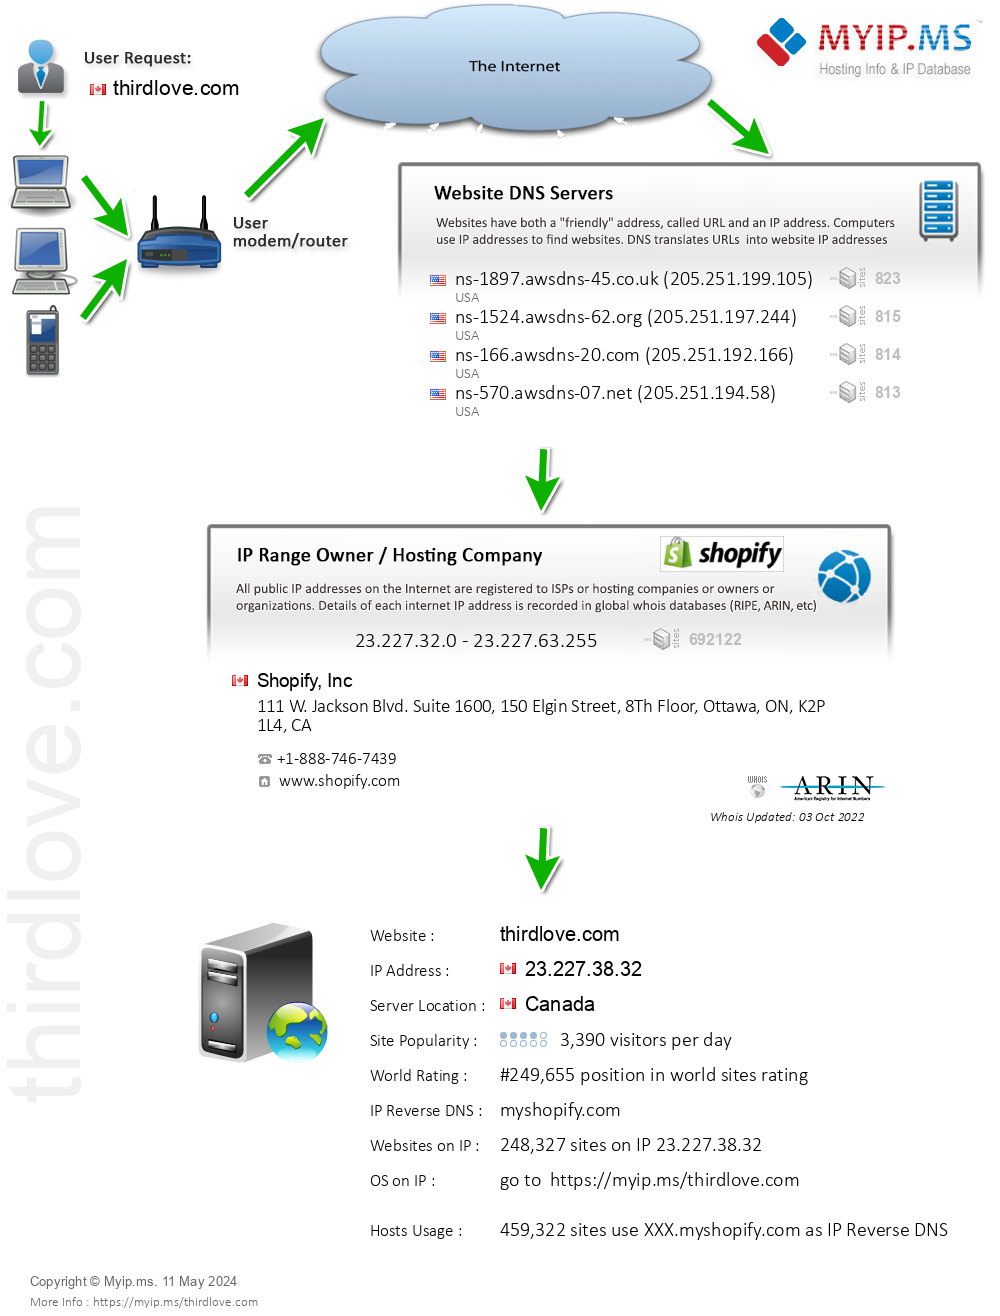 Thirdlove.com - Website Hosting Visual IP Diagram